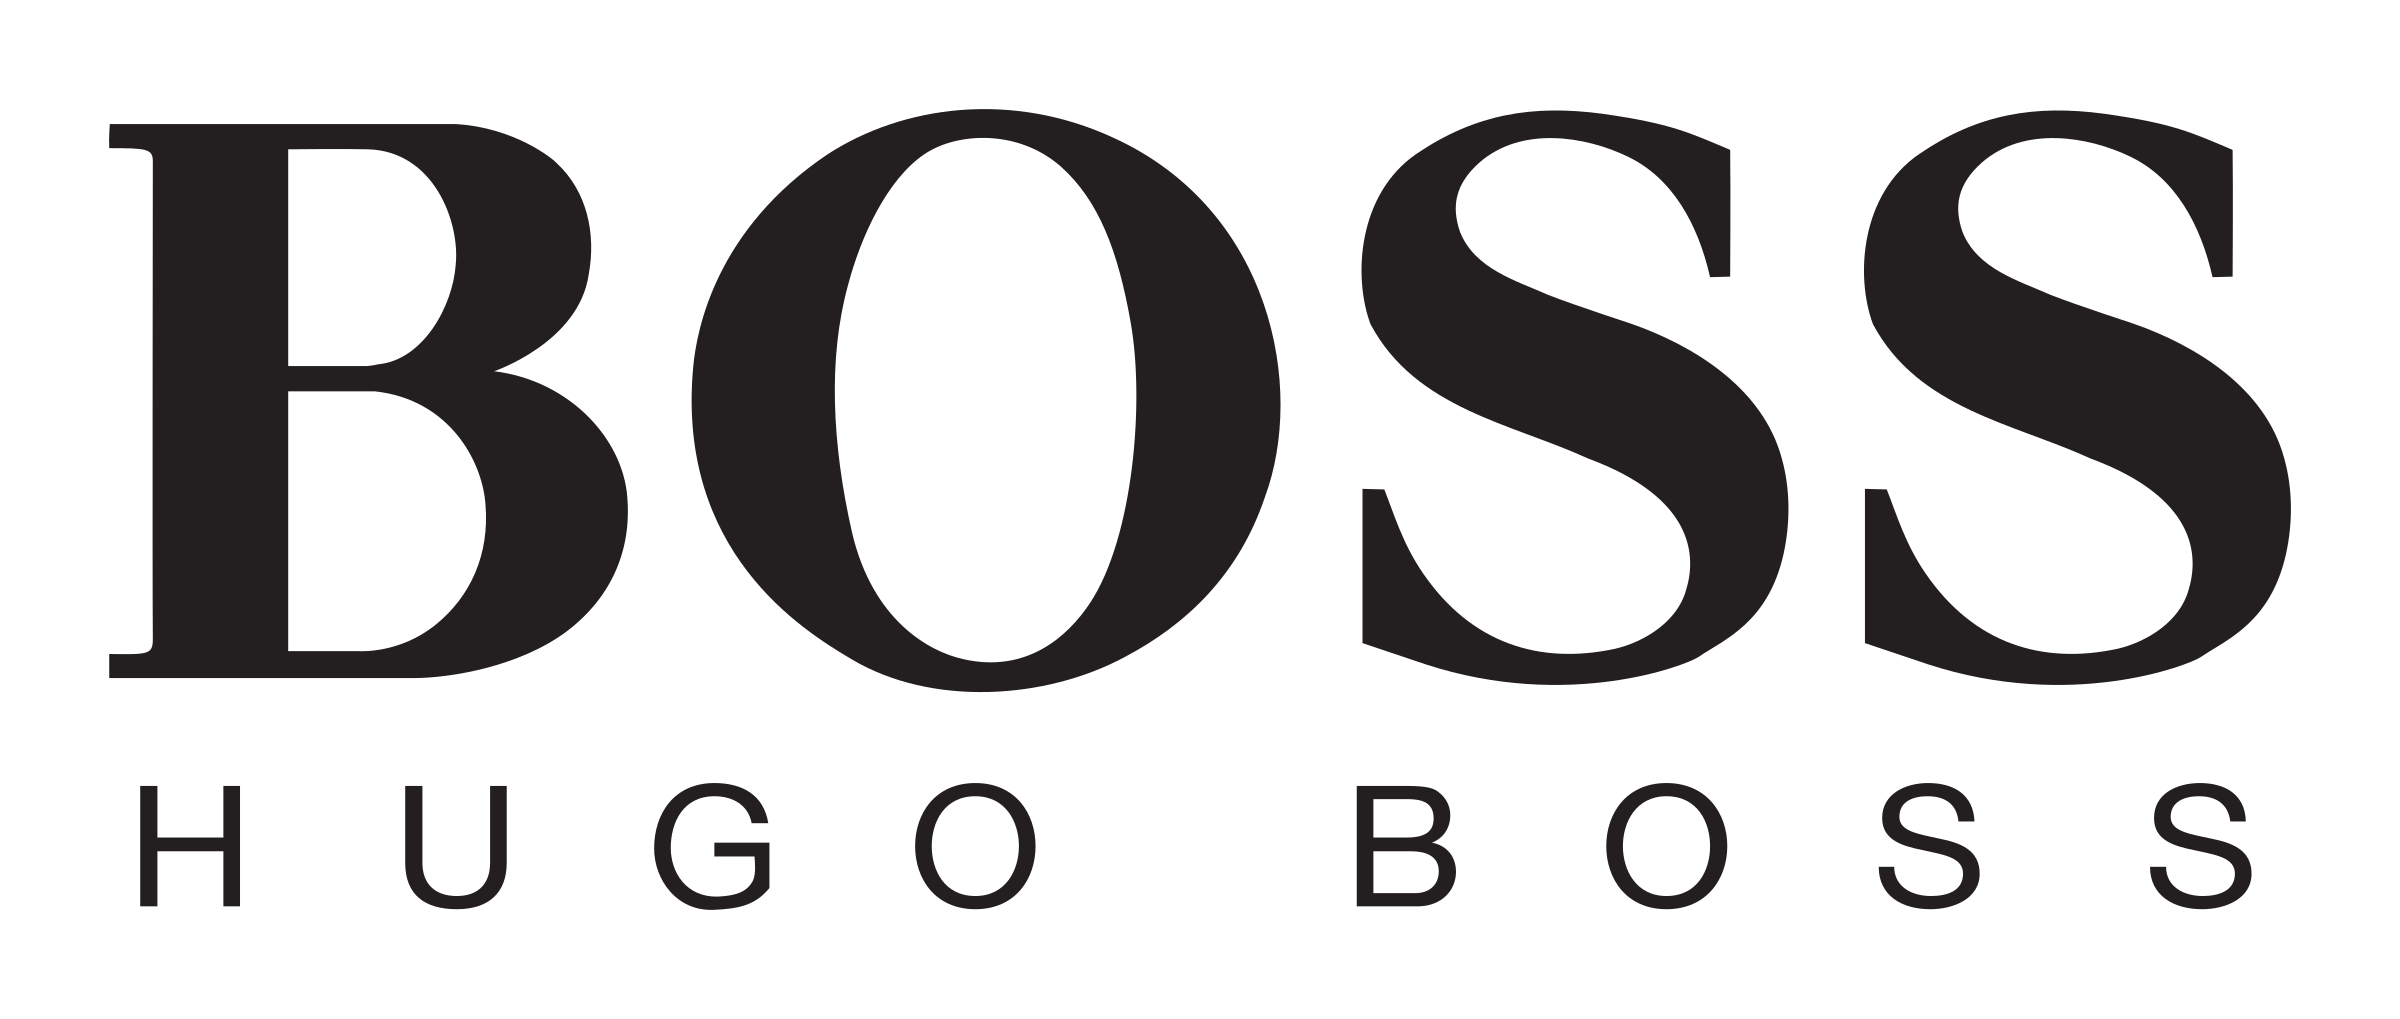 HUGO BOSS is a global leader 